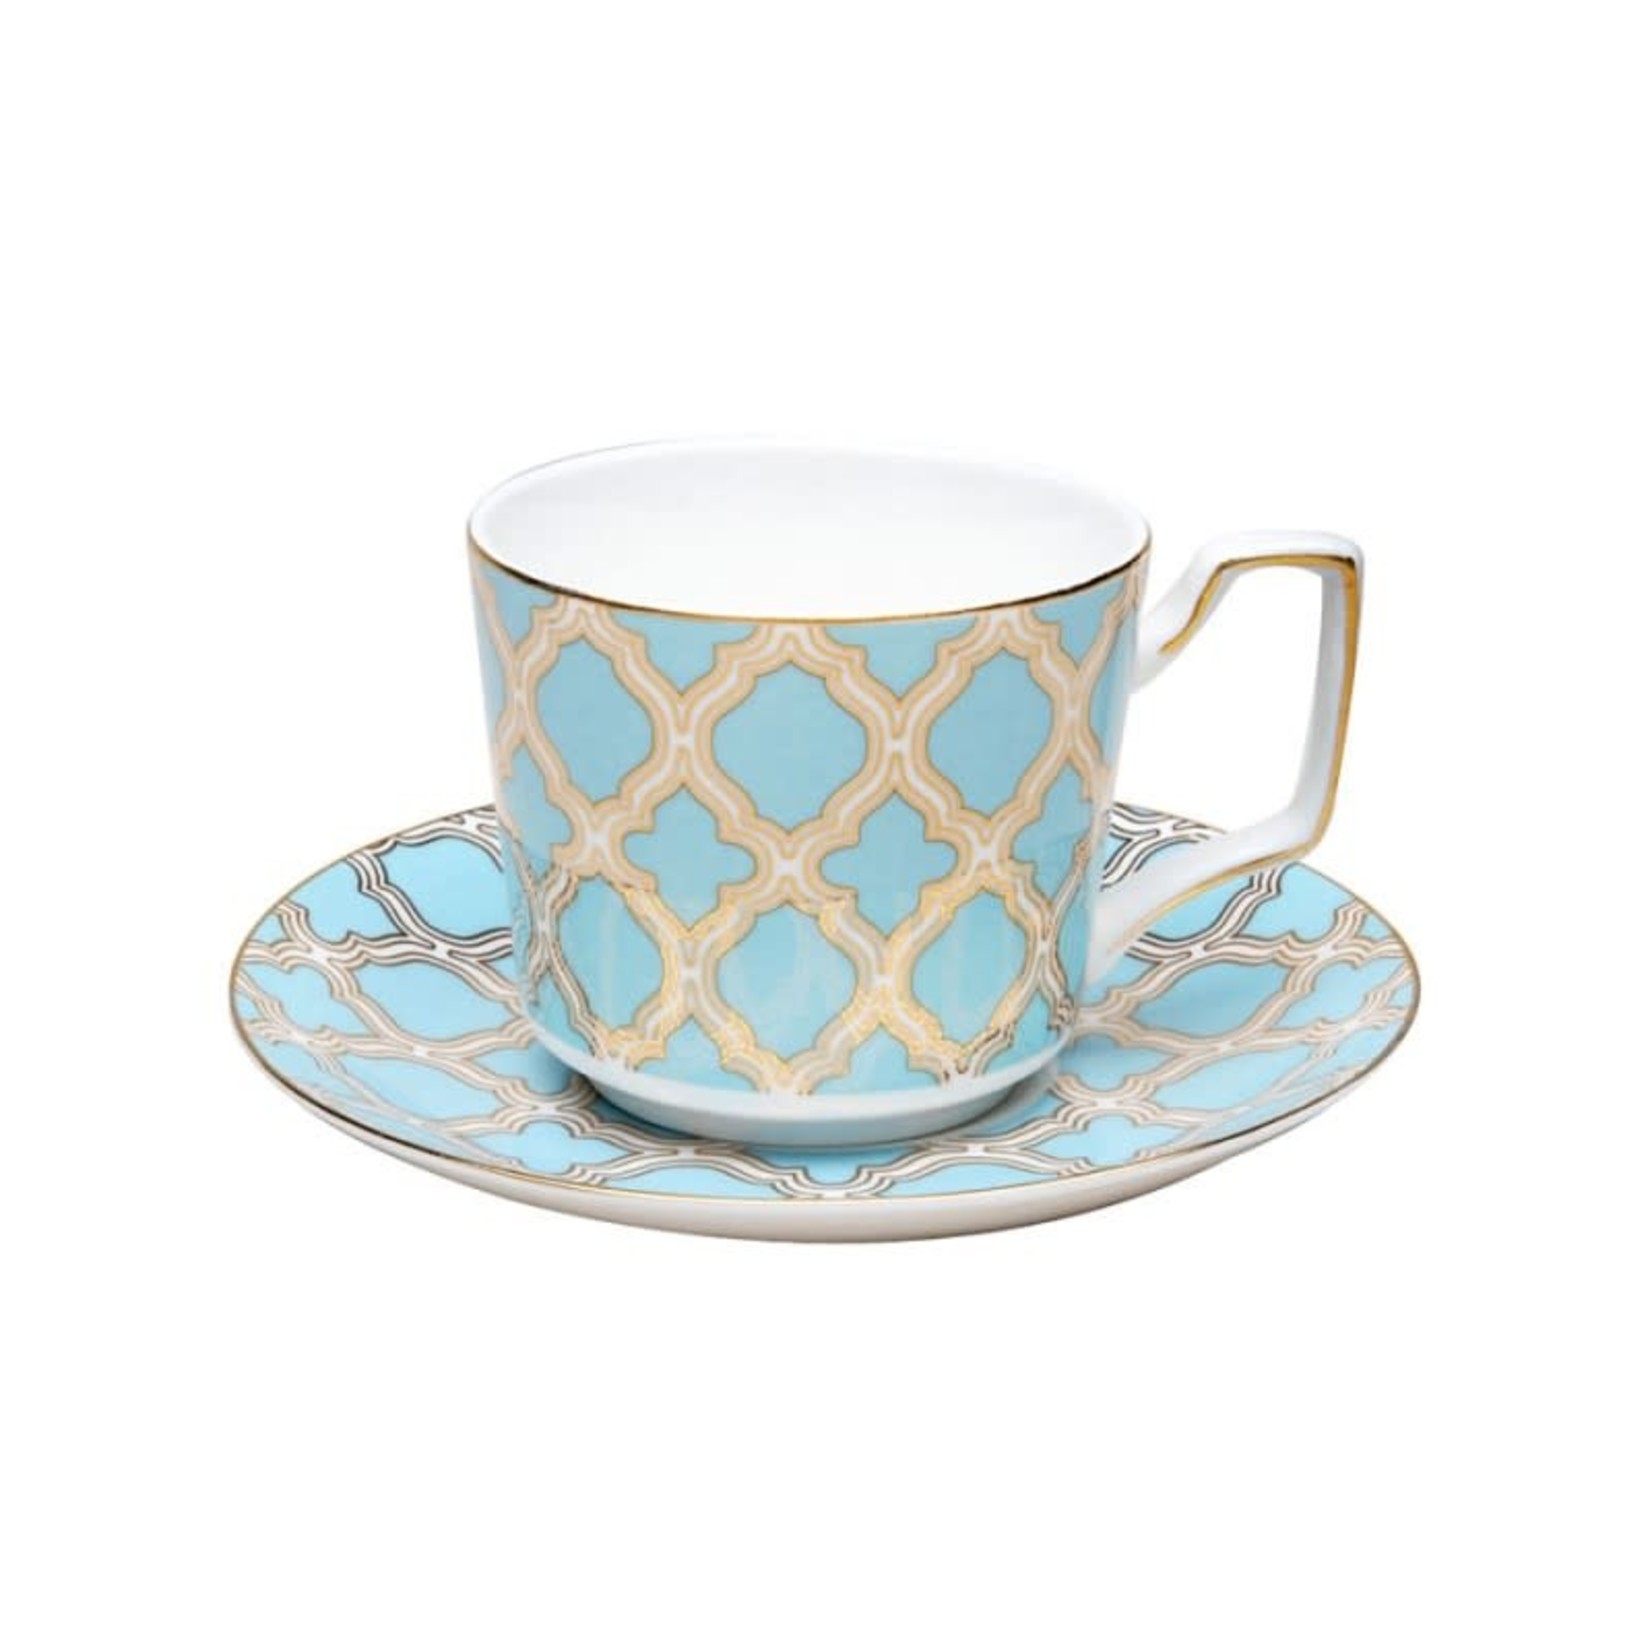 Debra Blue Silver Tea/Coffee Cup saucer Set of 4